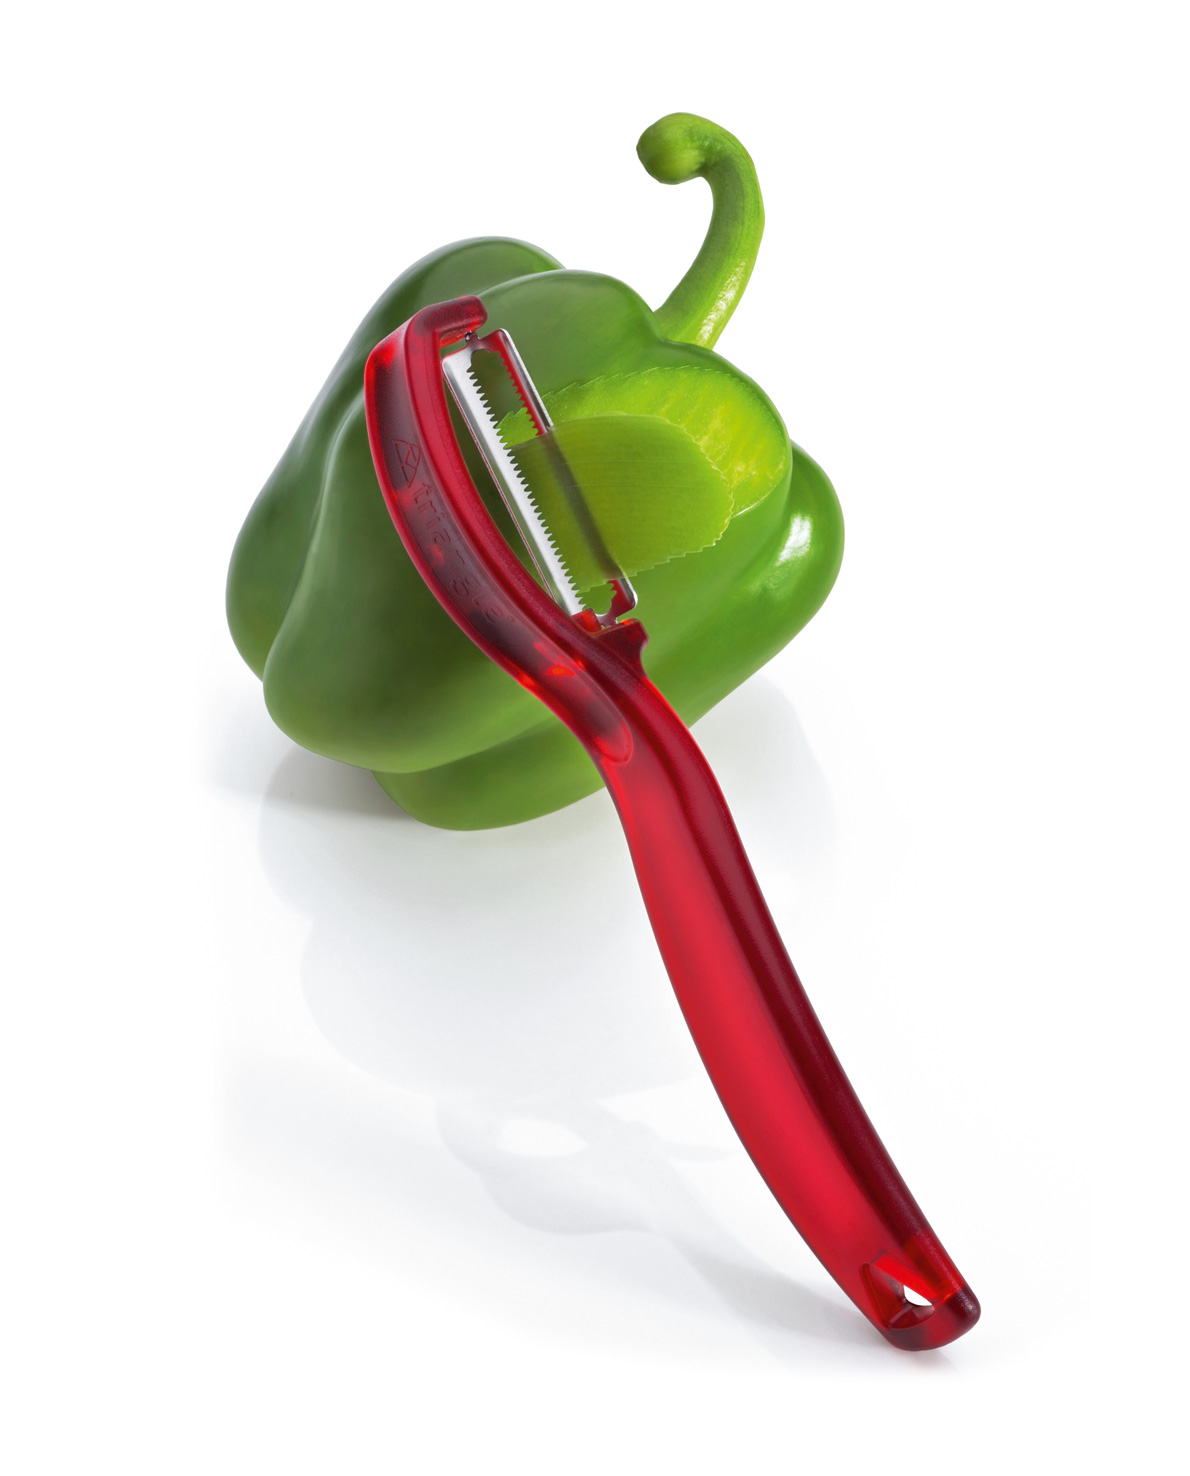 triangle tomato peeler peeling a green pepper